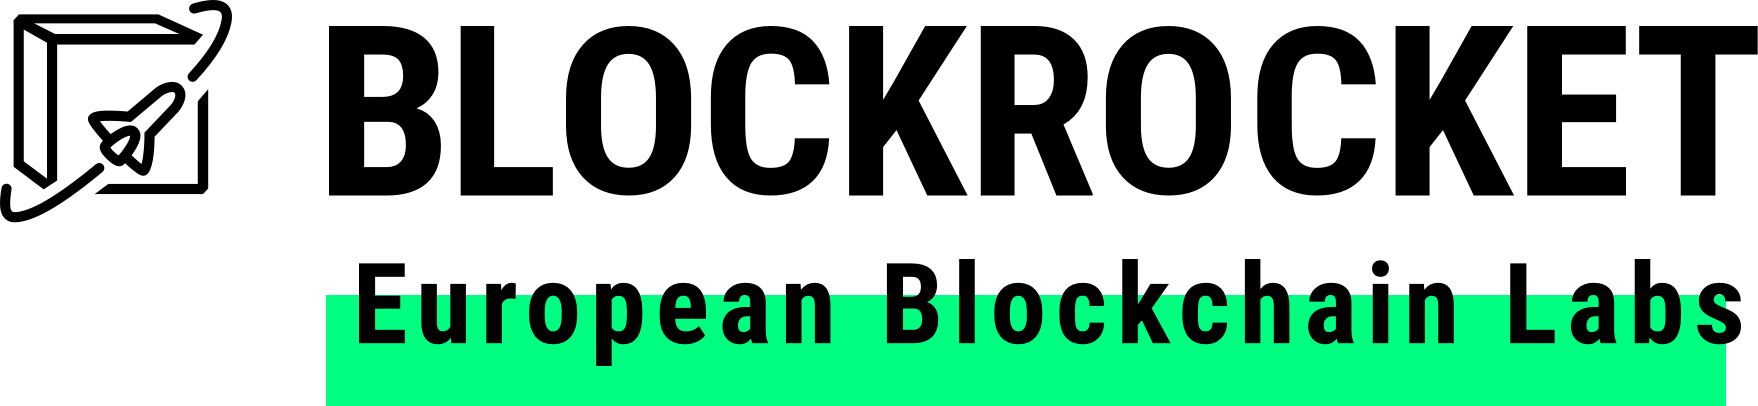 Blockrocket Blockchain Group Team